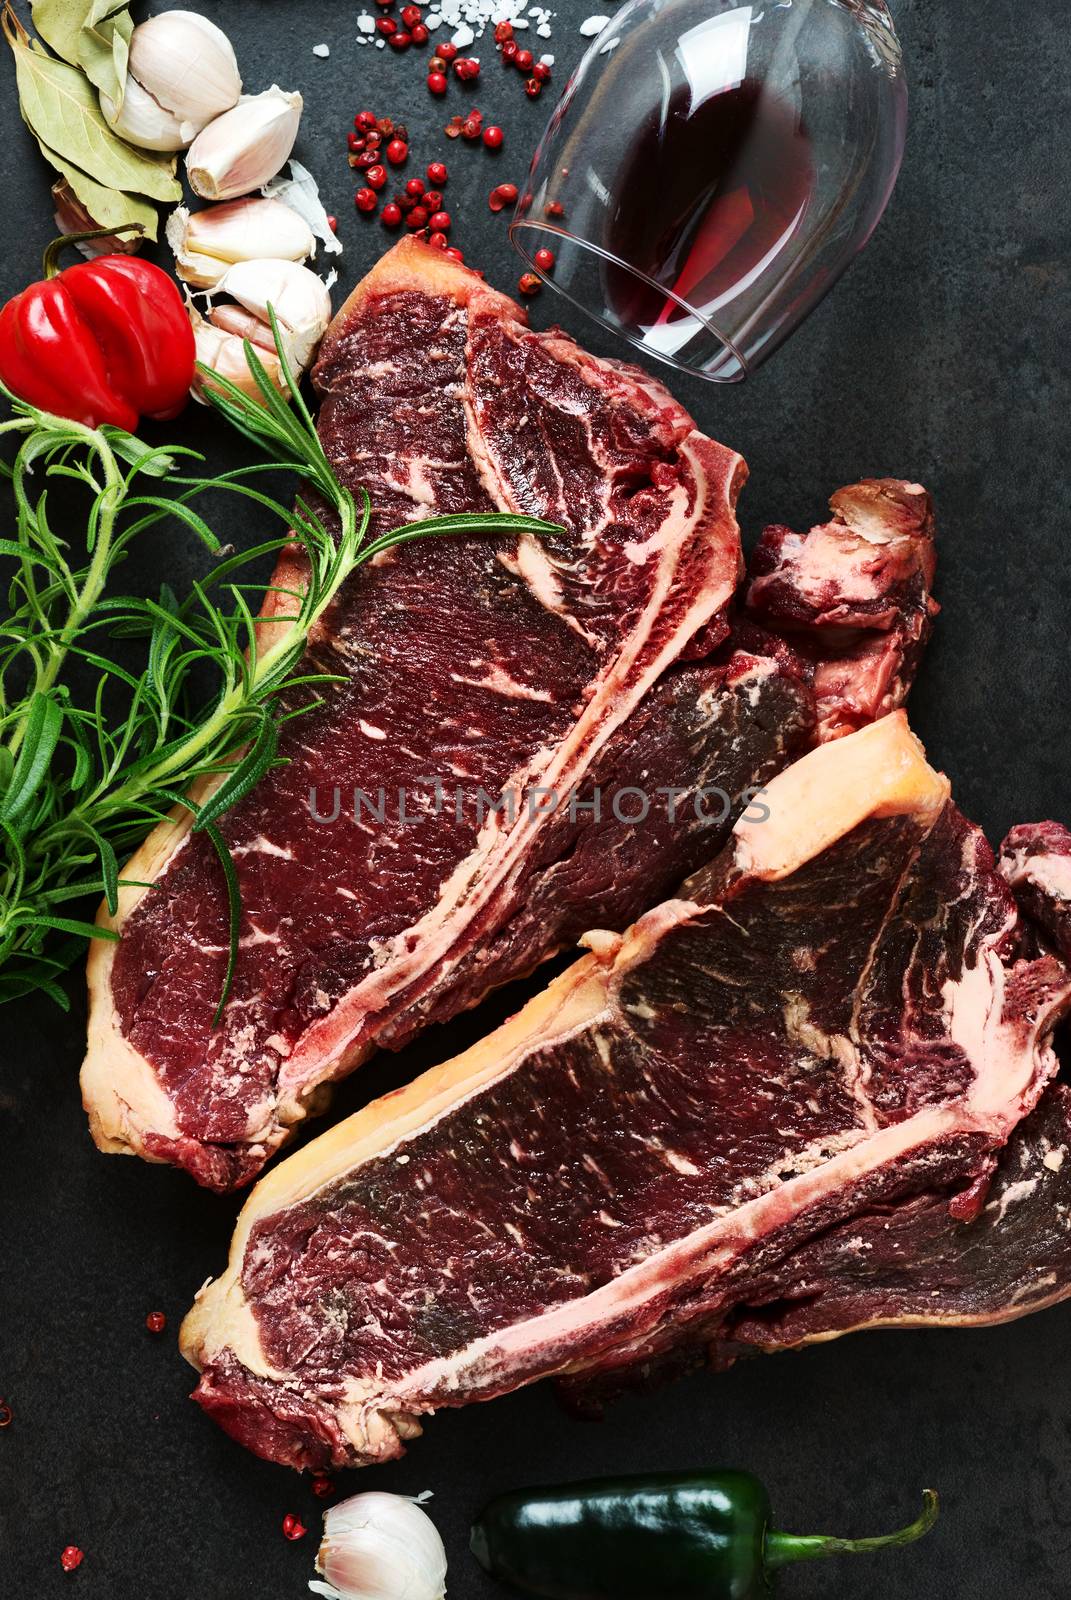 Raw aged meat T-bone steak and seasoning on dark background